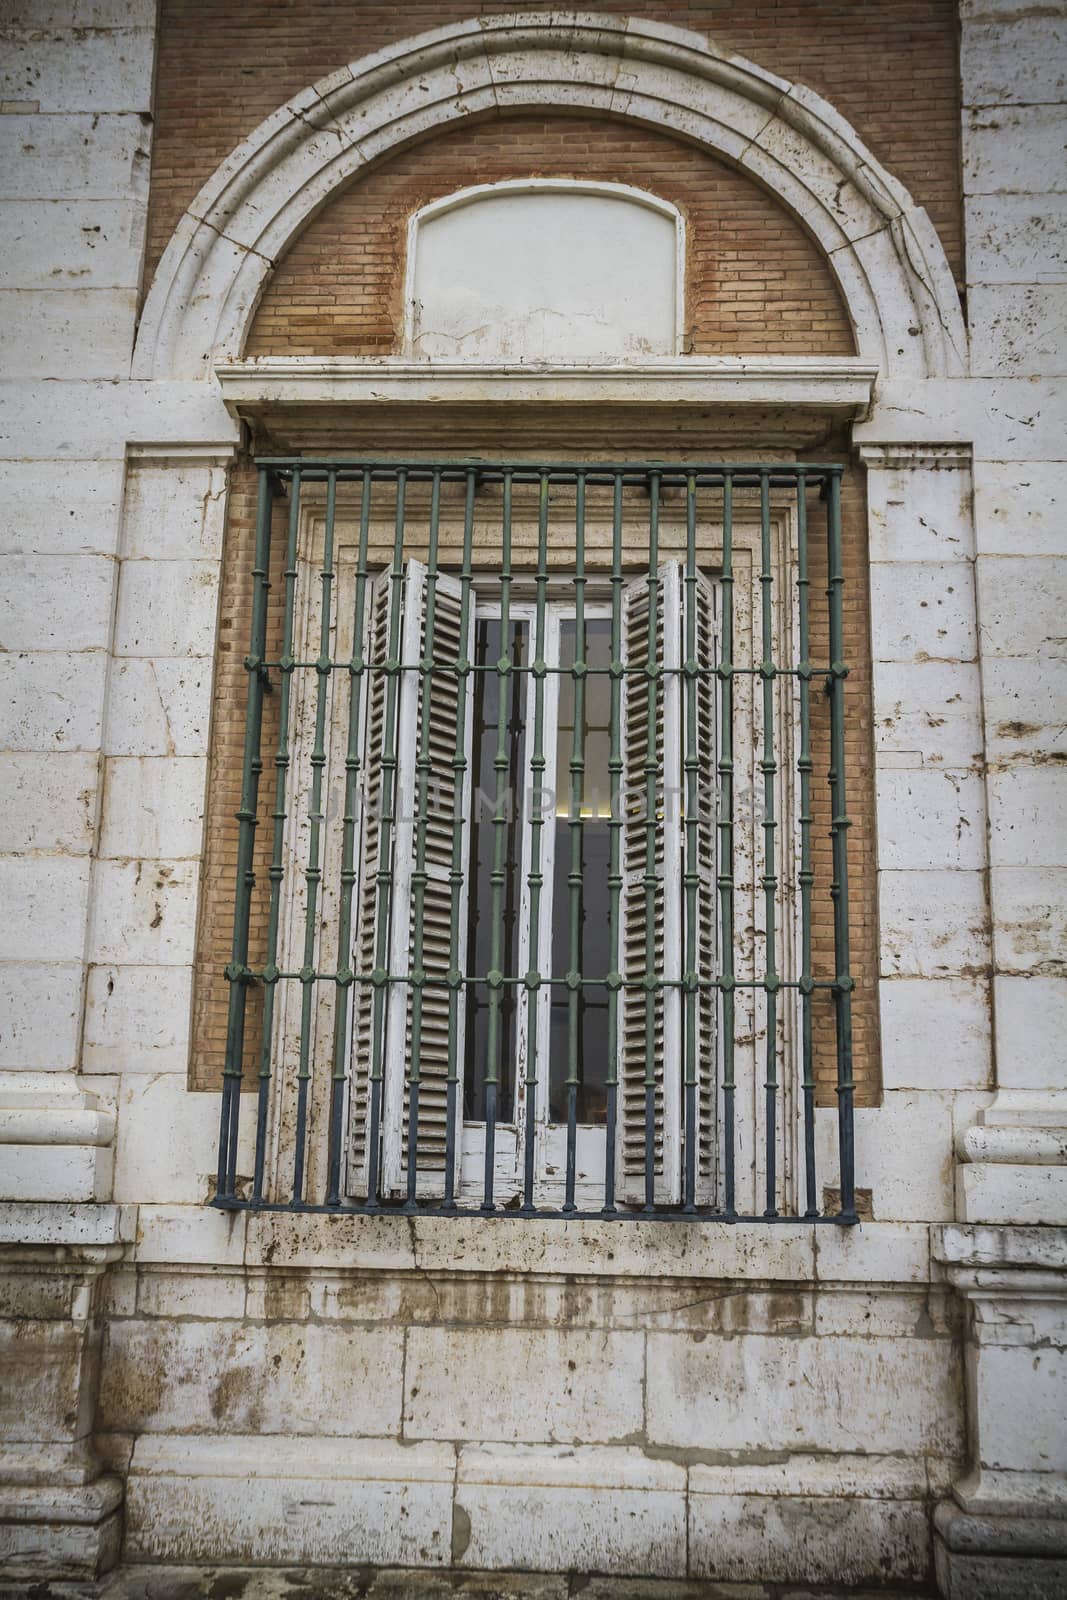 Window, majestic palace of Aranjuez in Madrid, Spain